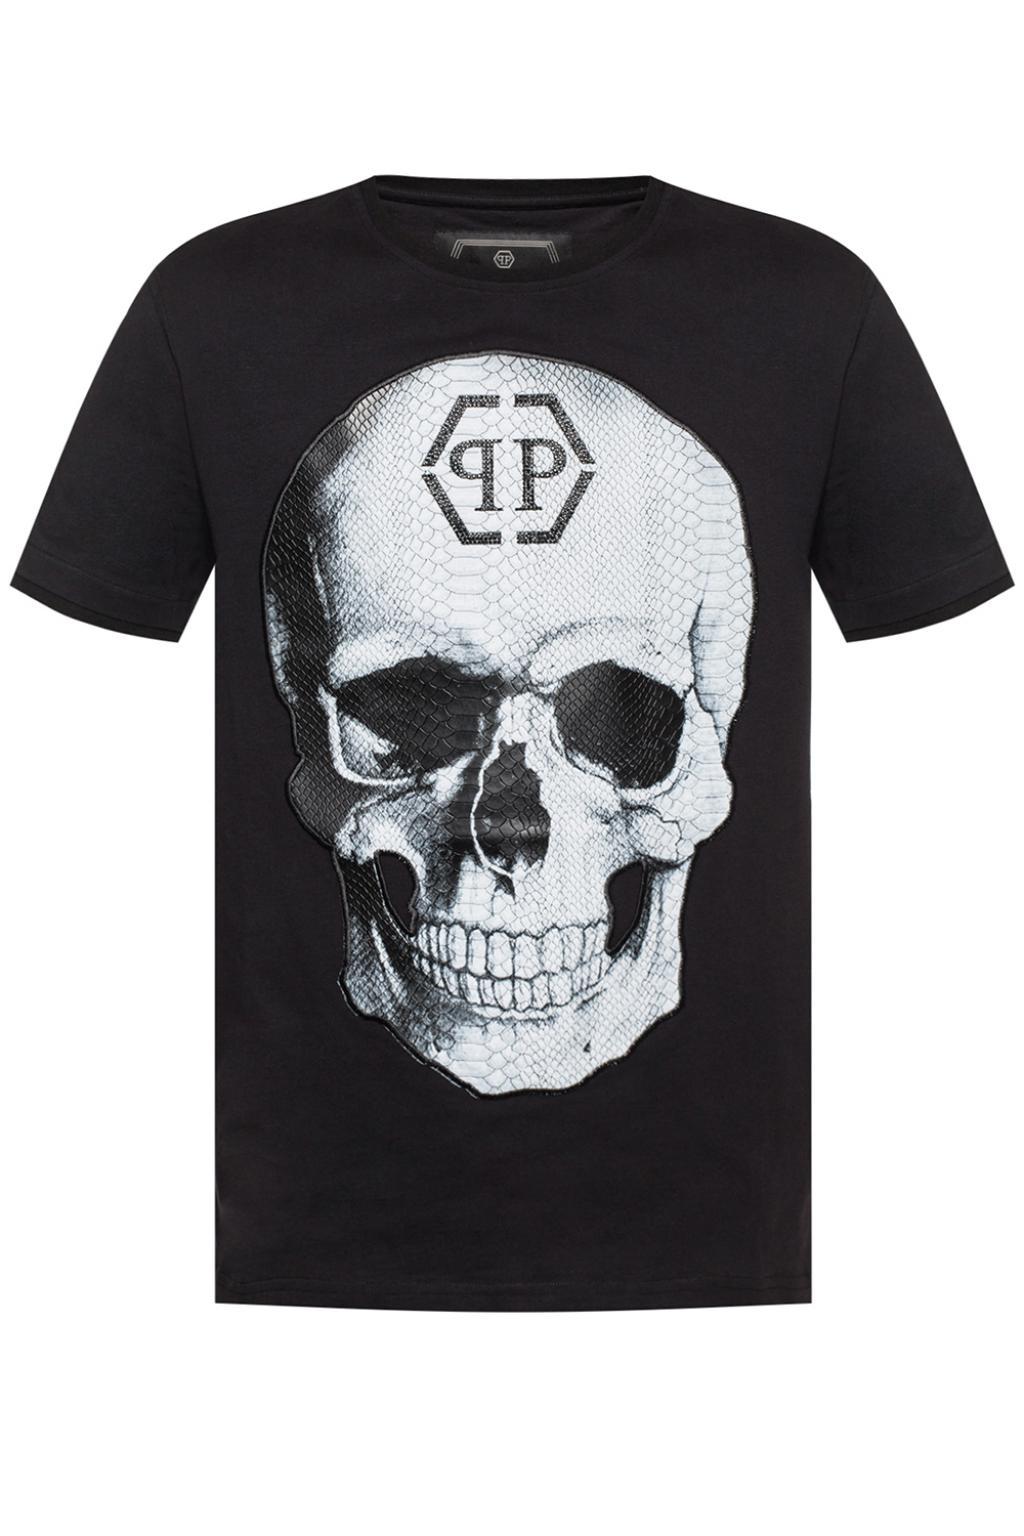 Philipp Plein Cotton Skull Motif T-shirt in Black for Men - Lyst